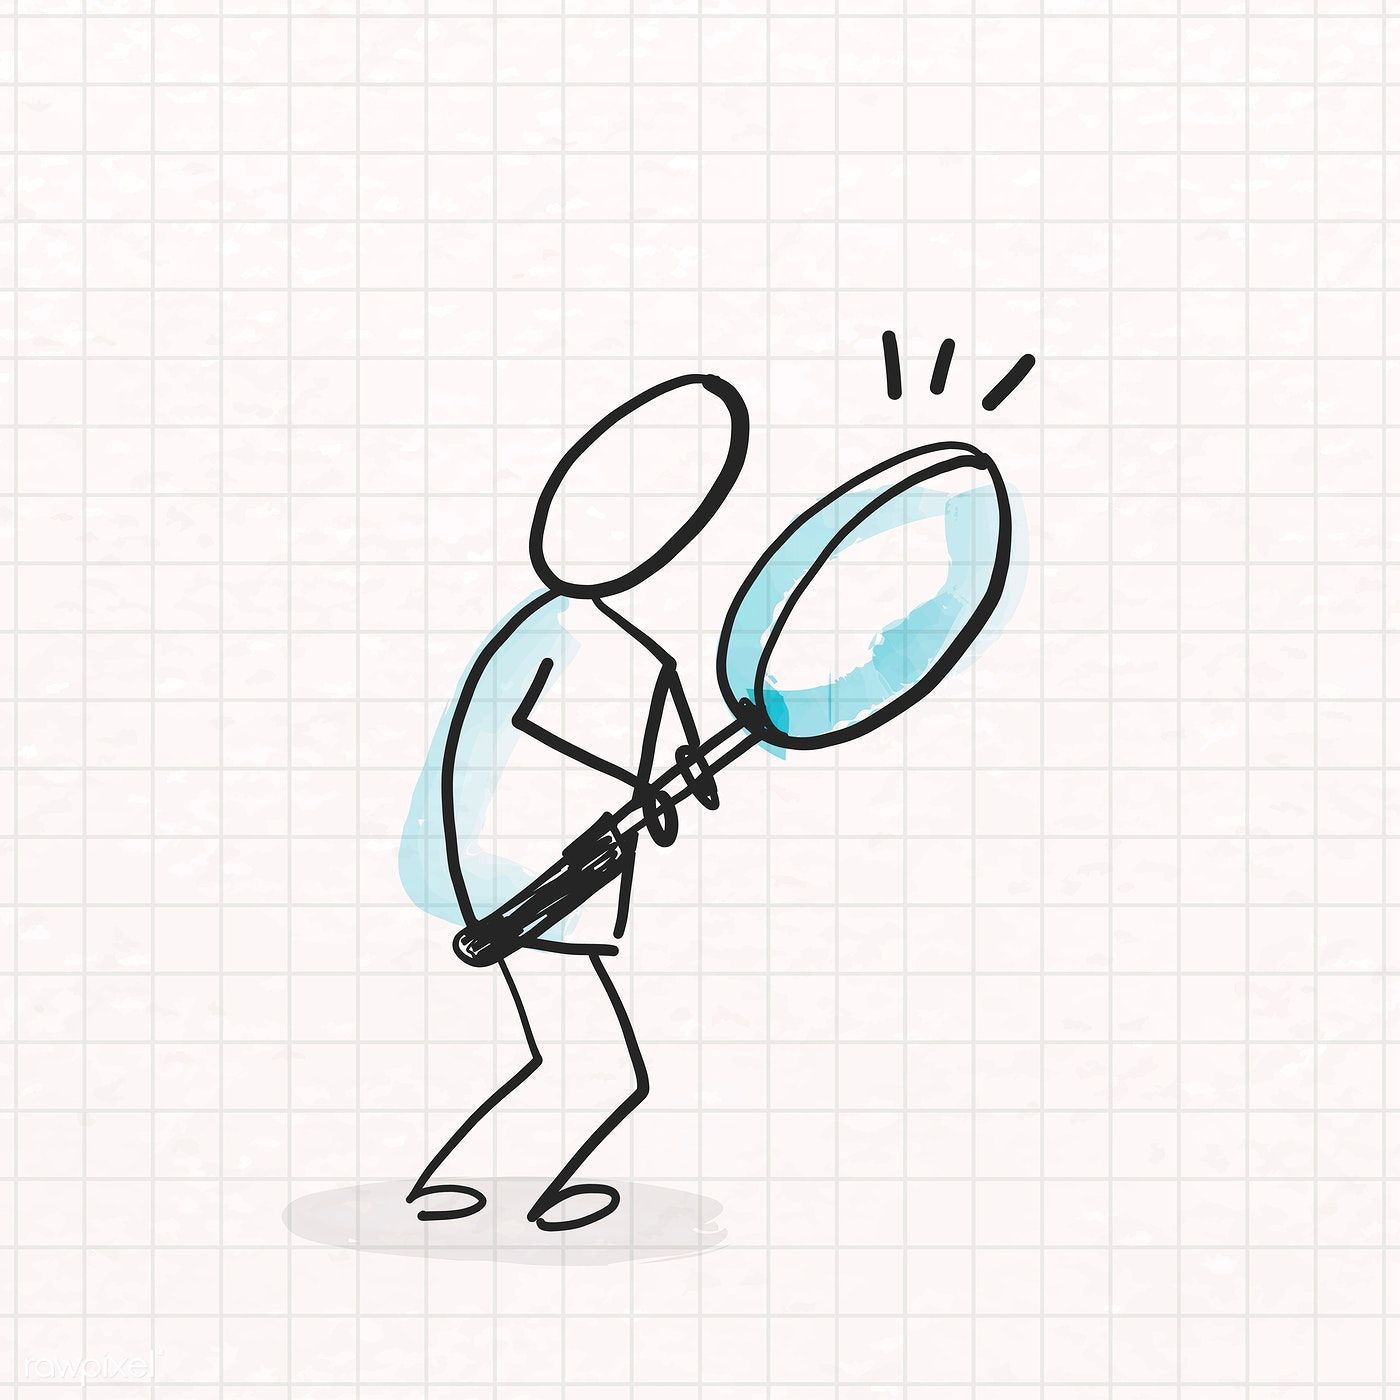 Download premium vector of Creative magnifying glass doodle vector